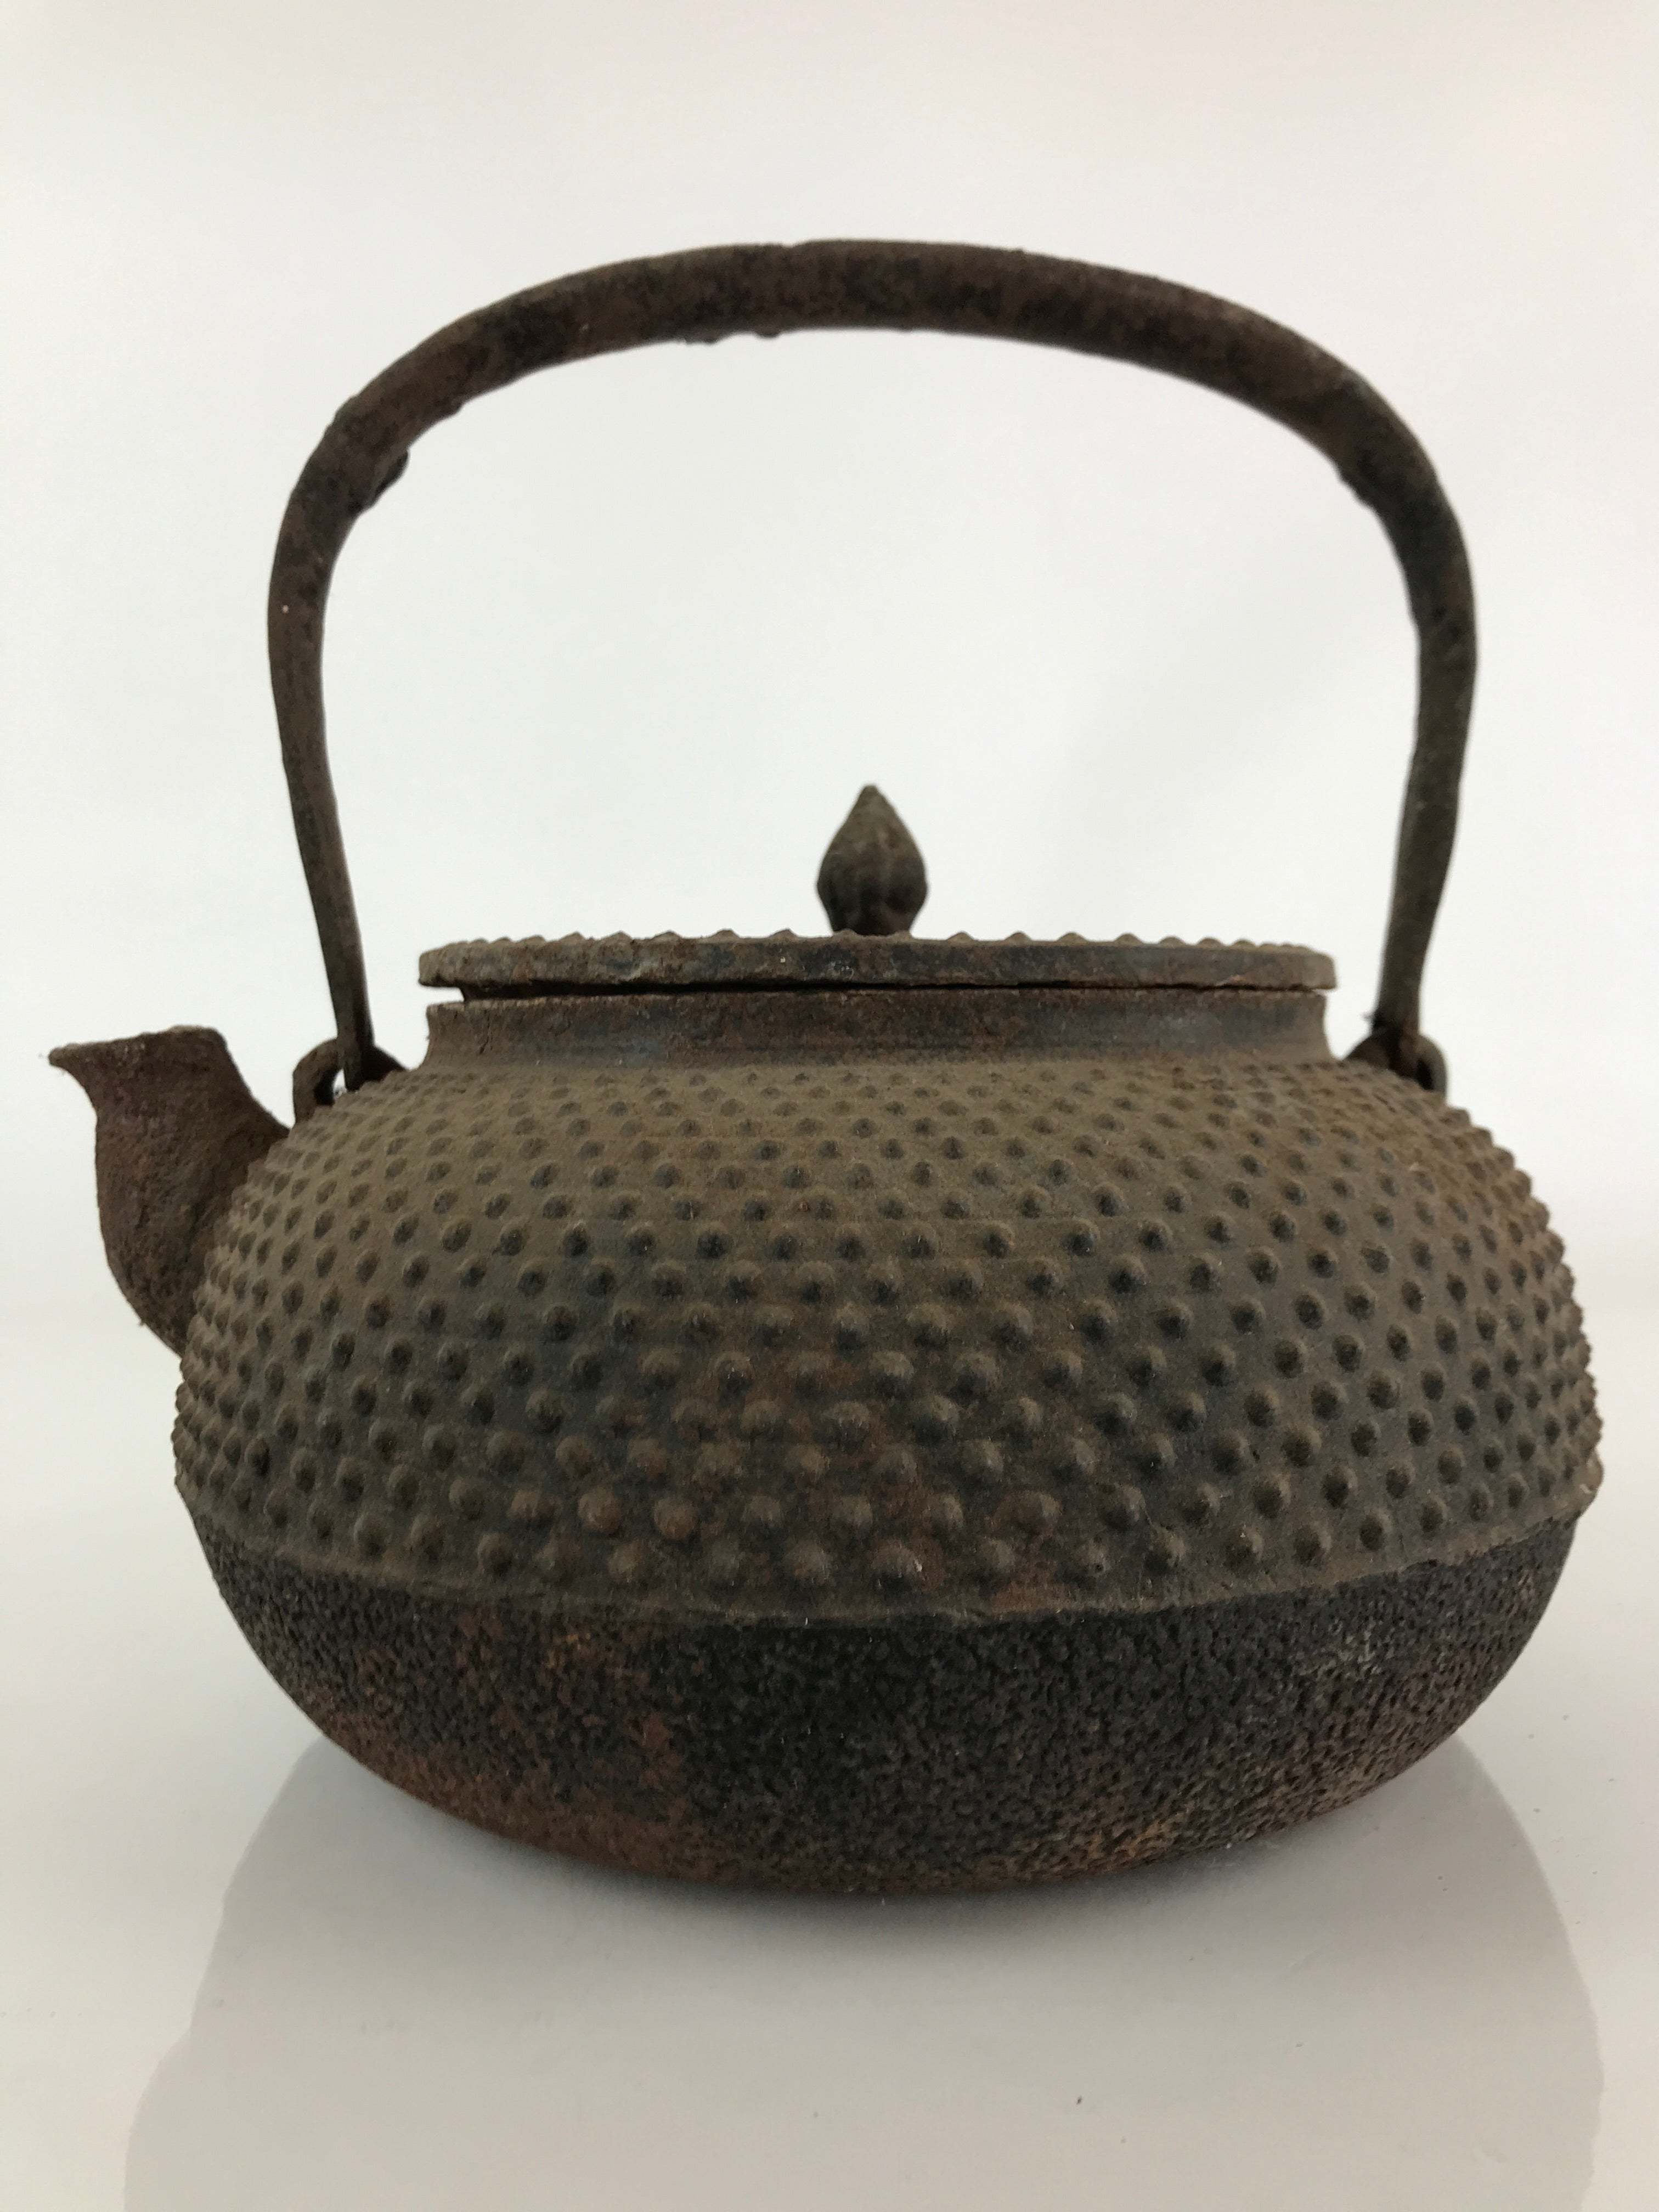 Japanese Cast Iron Tea Kettles: A History of the Tetsubin